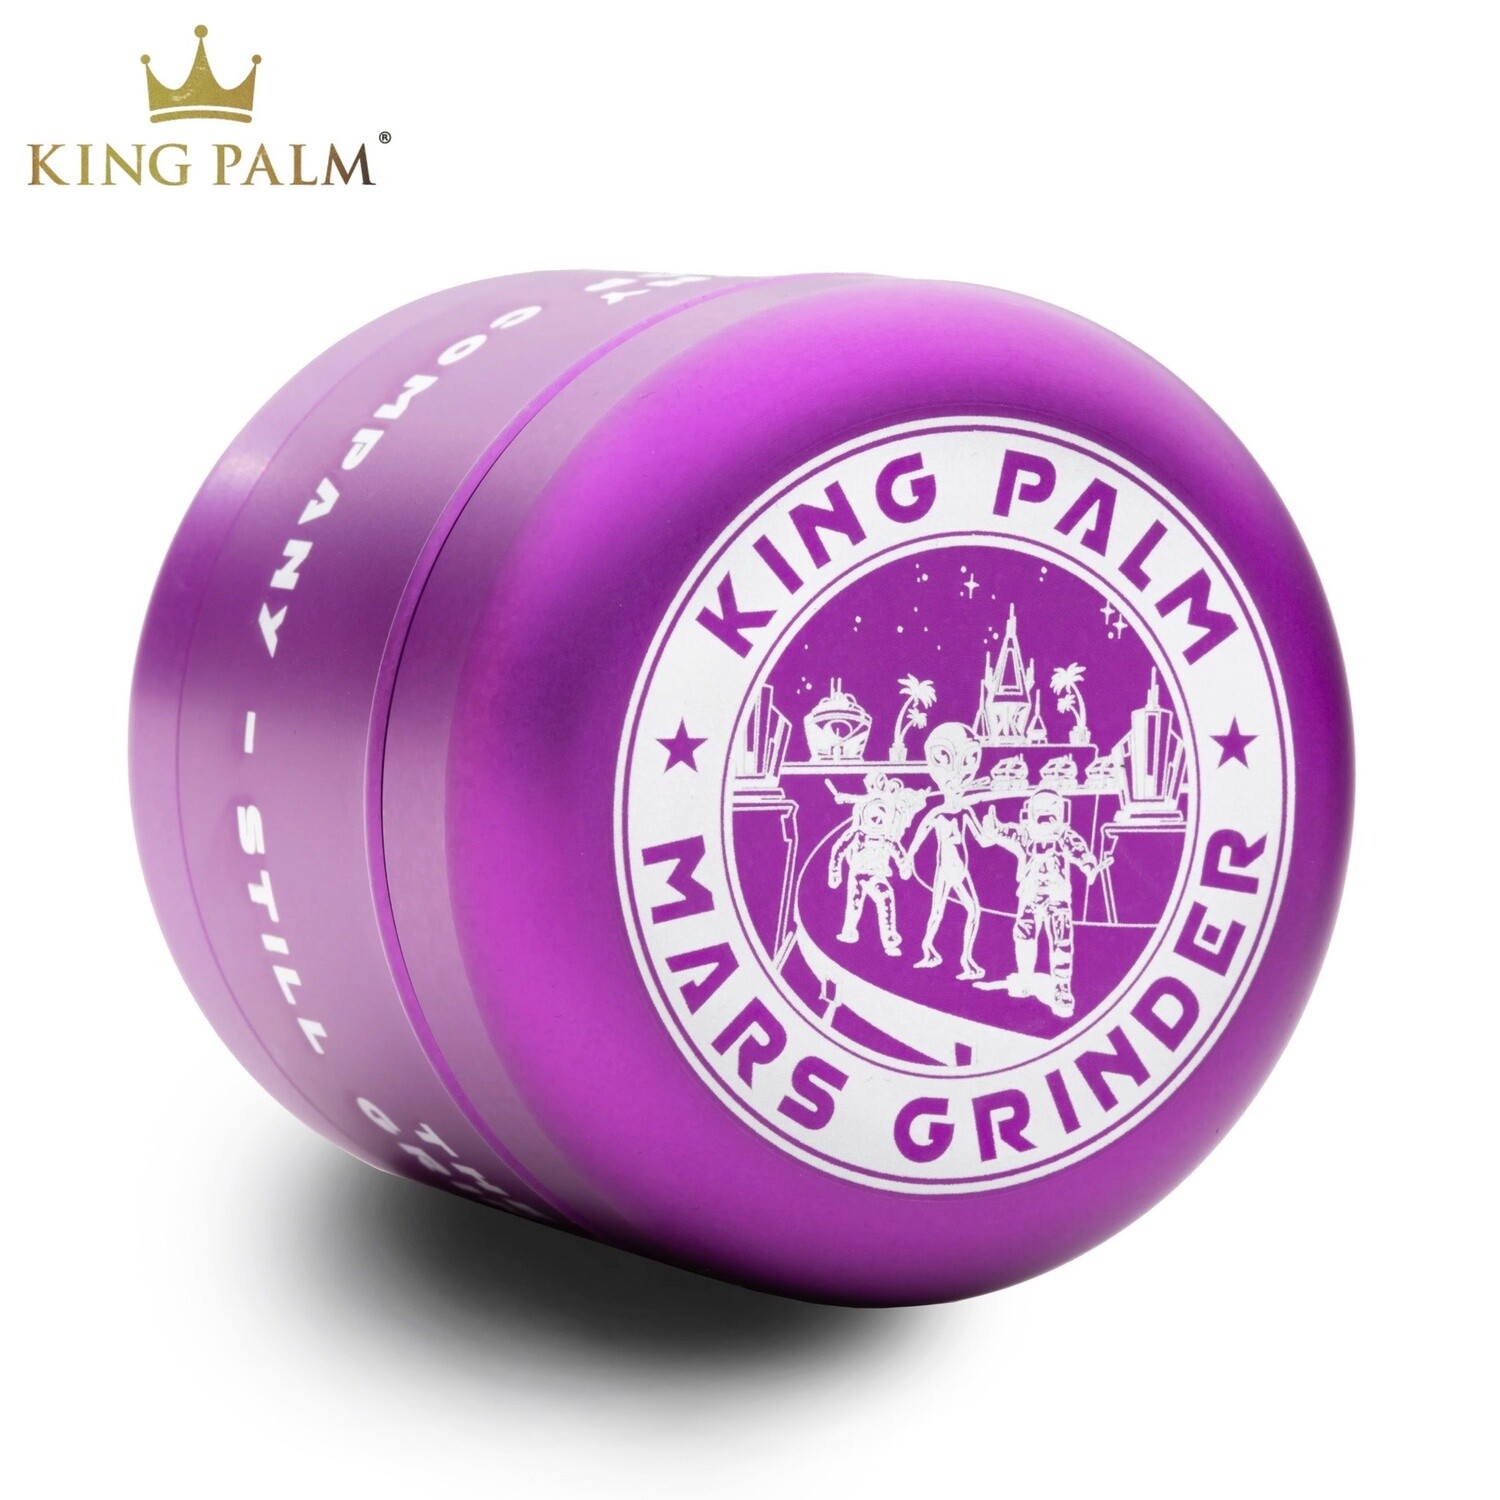 King Palm® Mars Grinder (Purple)